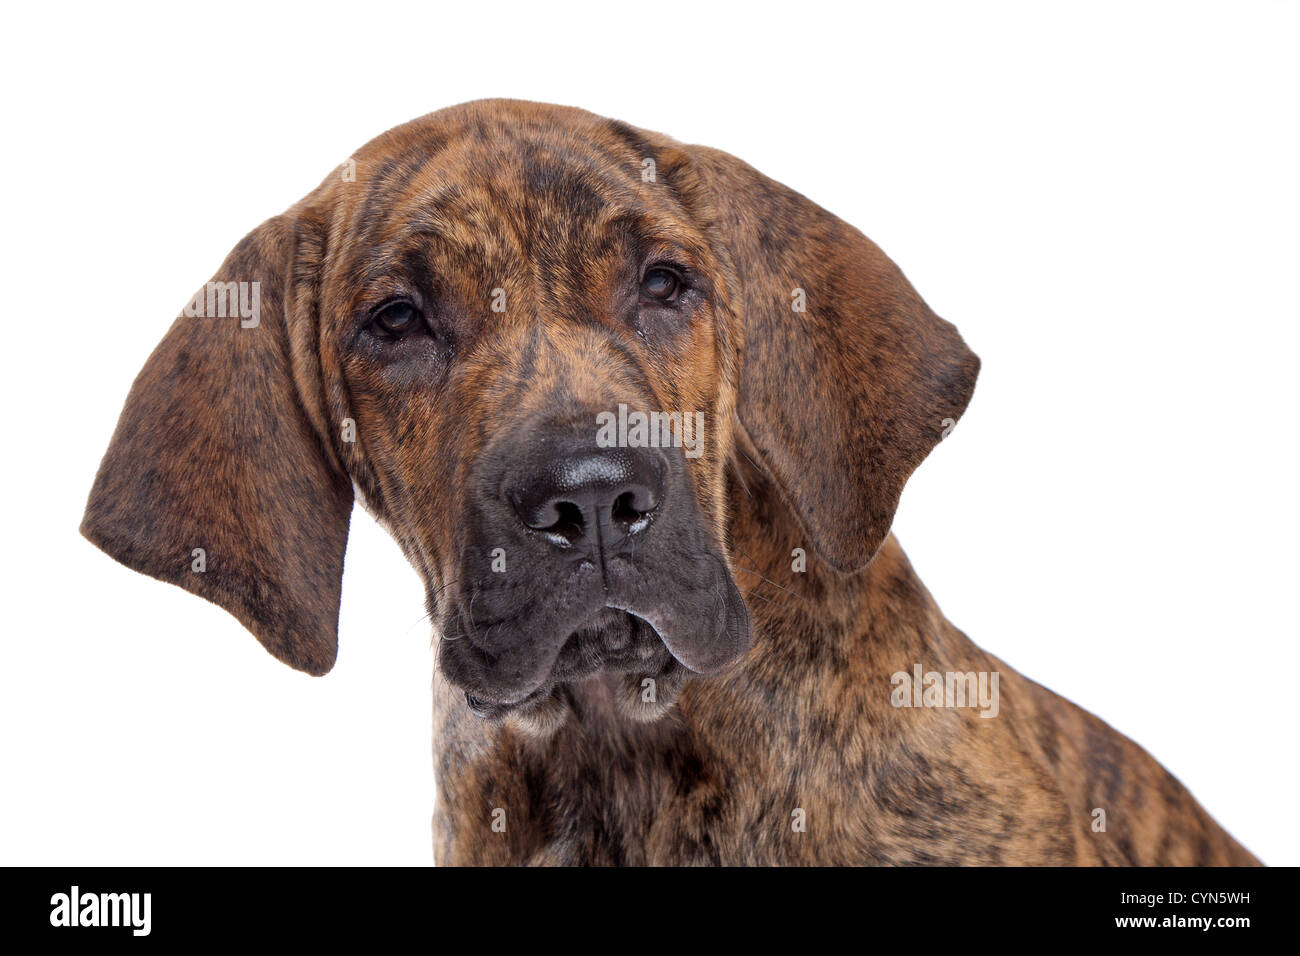 https://c8.alamy.com/comp/CYN5WH/brazilian-mastiff-also-known-as-fila-brasileiro-puppy-in-front-of-CYN5WH.jpg